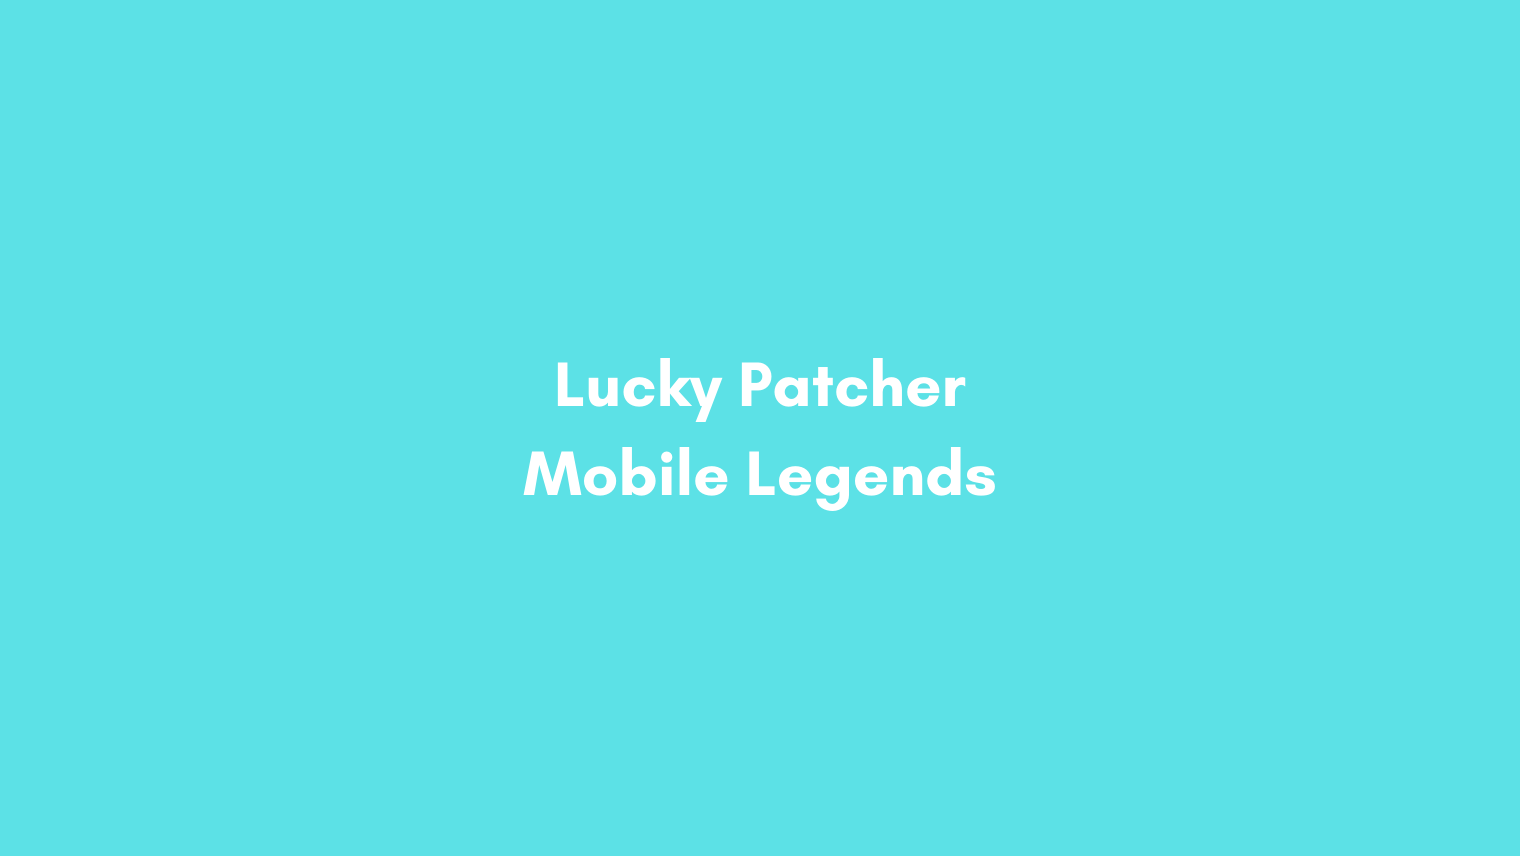 Cara Hack Mobile Legend Dengan Lucky Patcher. √ Cara Cheat Mobile Legends Menggunakan Lucky Patcher